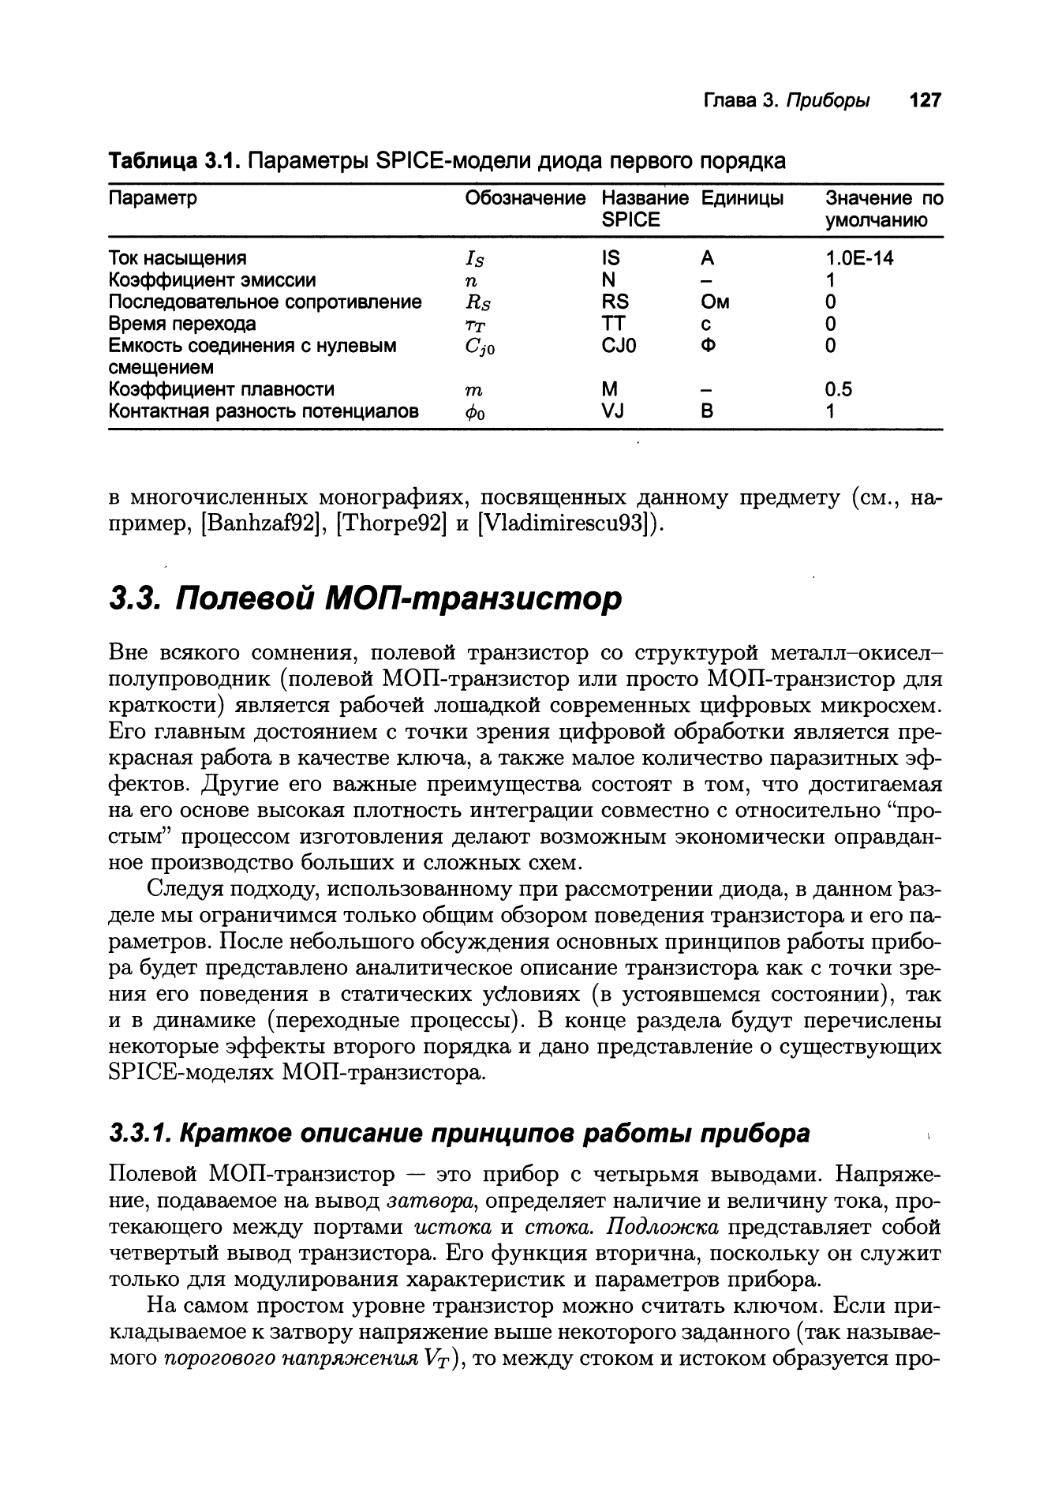 3.3. Полевой МОП-транзистор